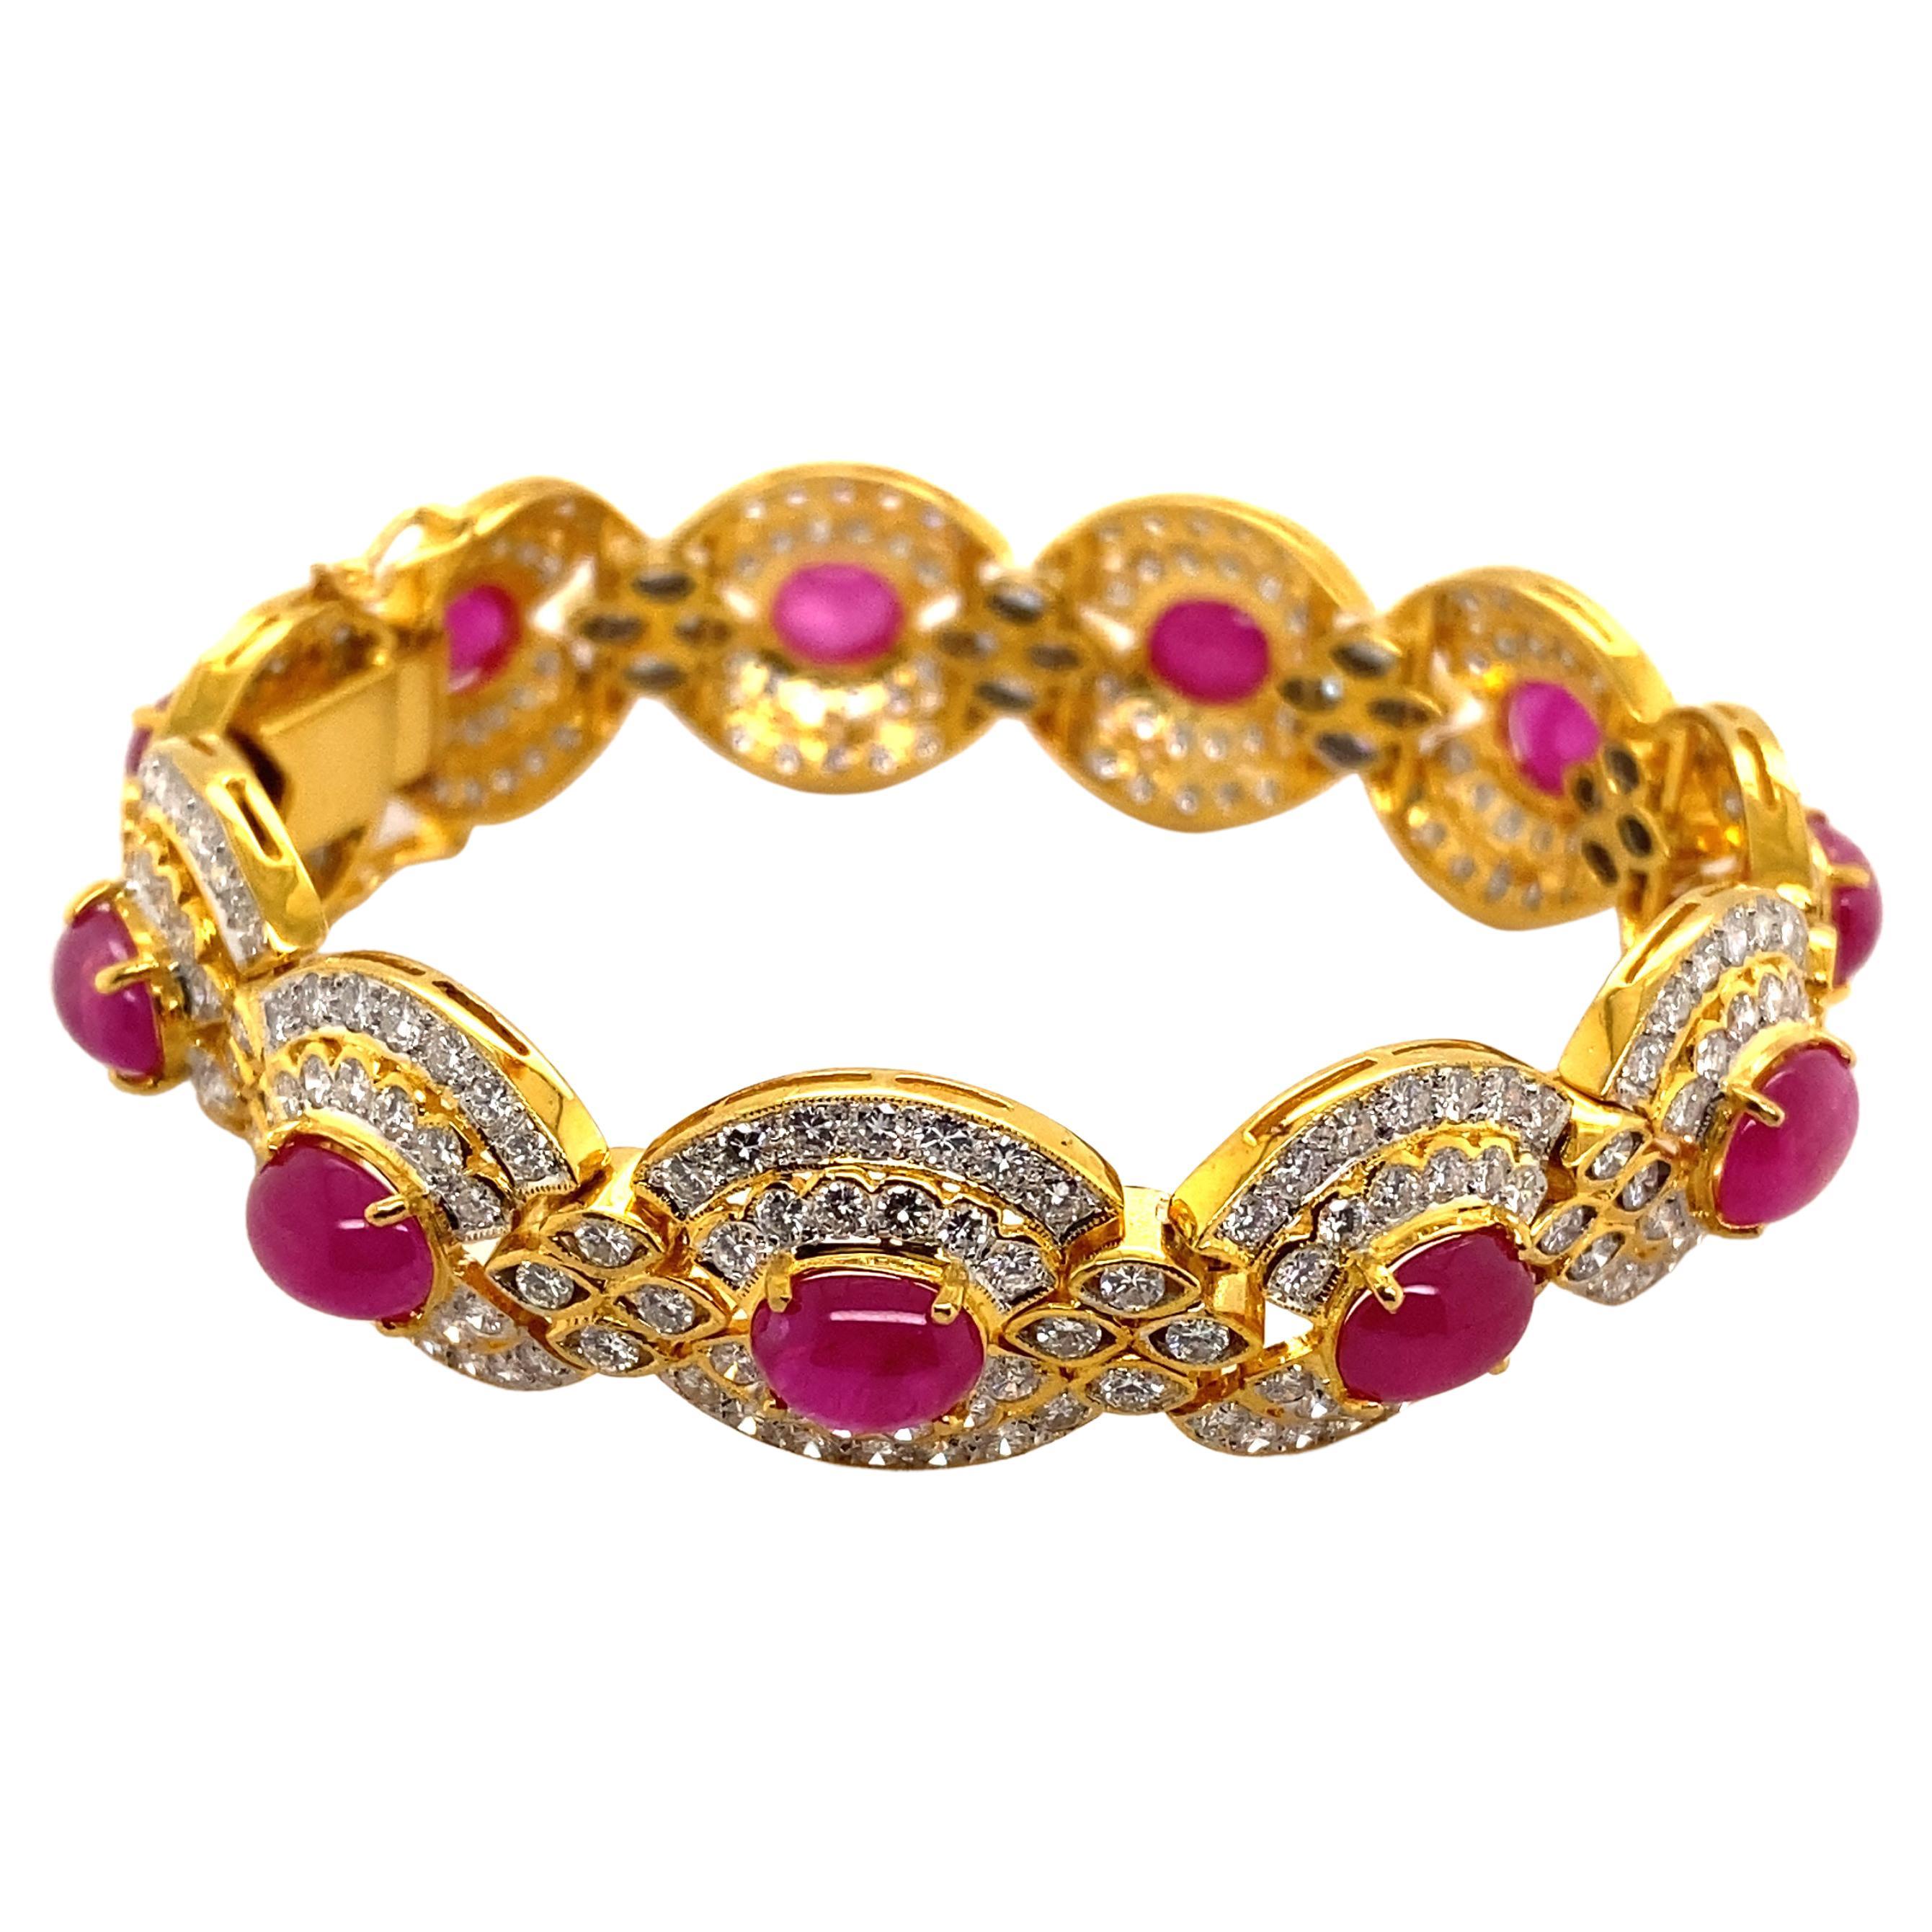 Splendid Ruby and Diamond Bracelet in 18 Karat Yellow Gold